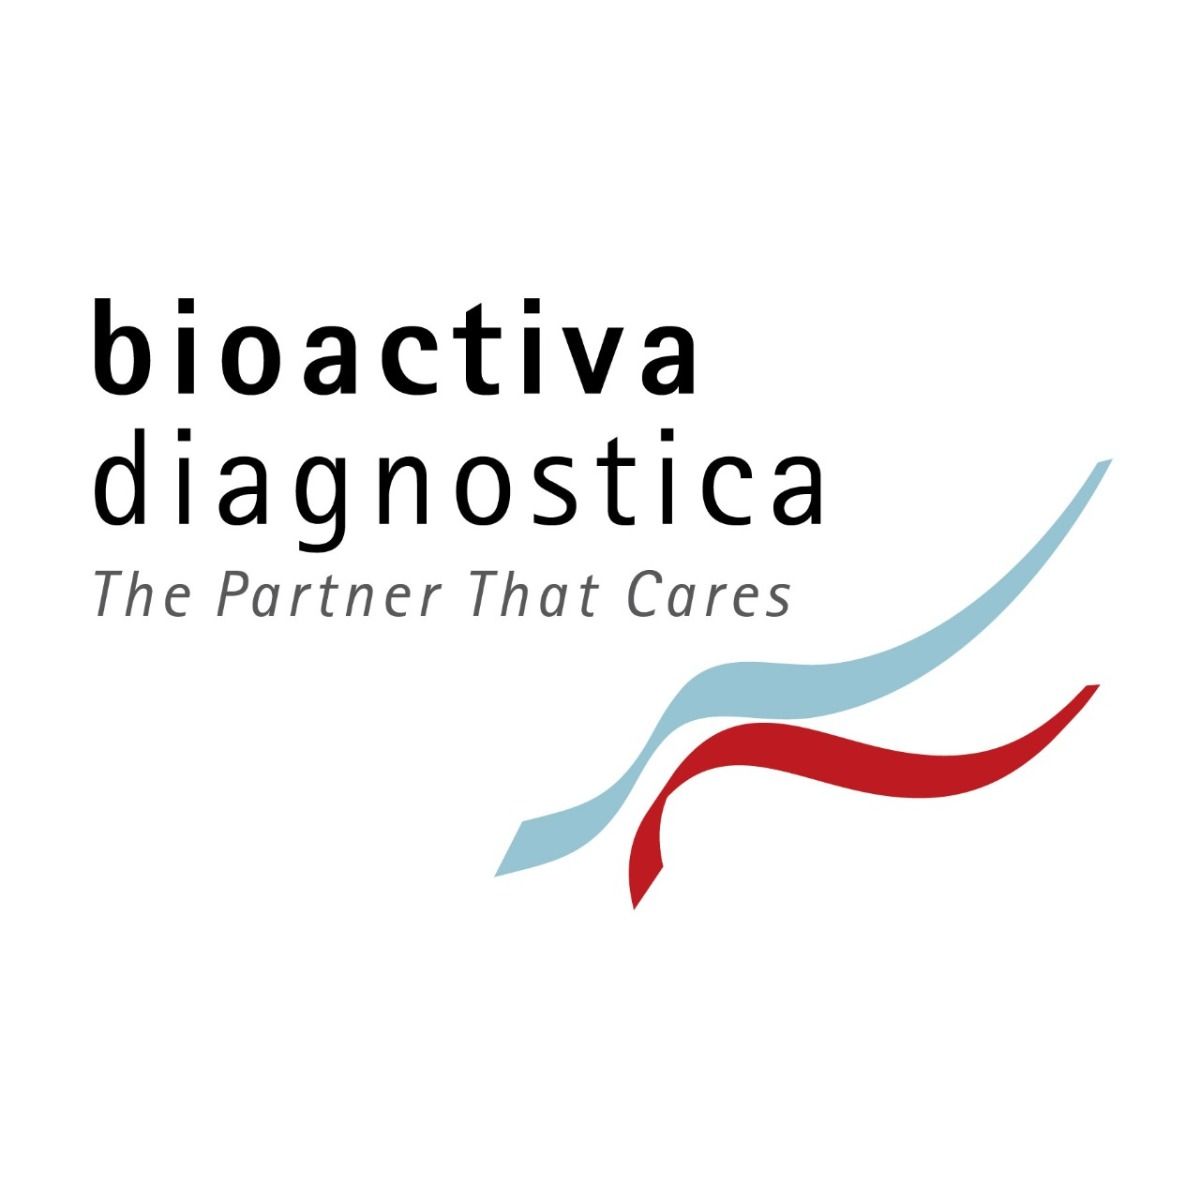 bioactiva diagnostica